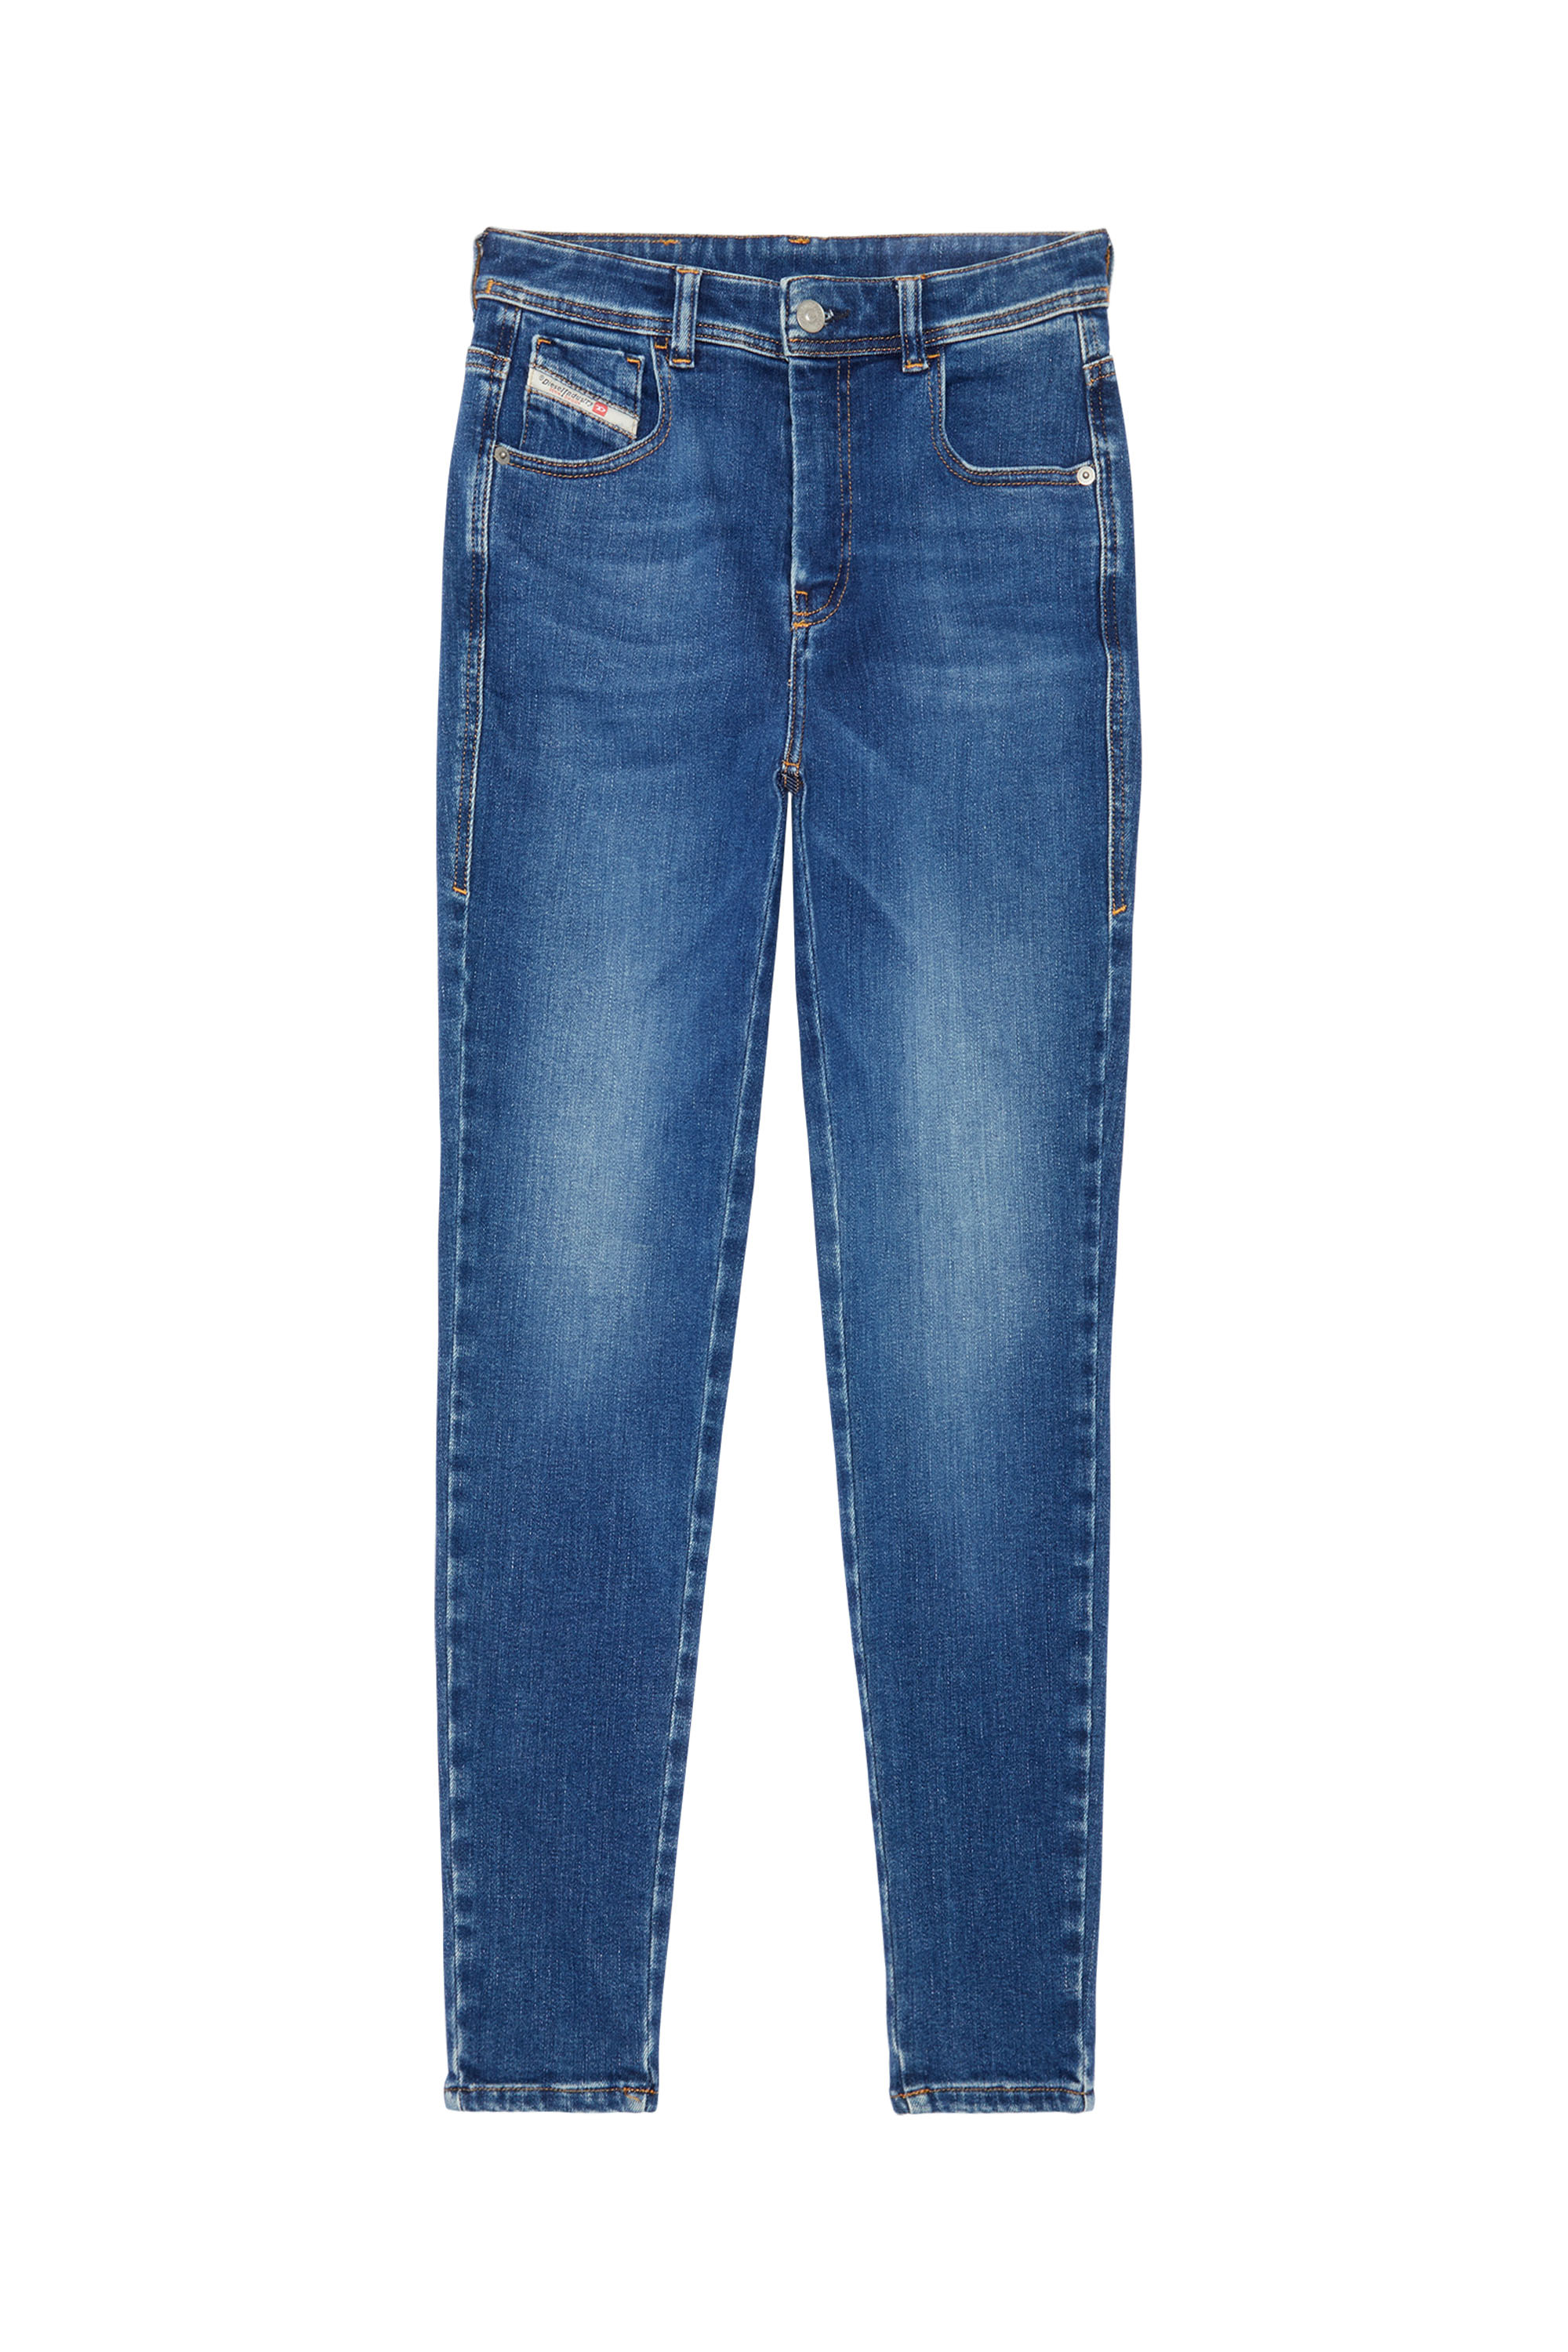 1984 Slandy-High 09C21 Super skinny Jeans, Medium blue